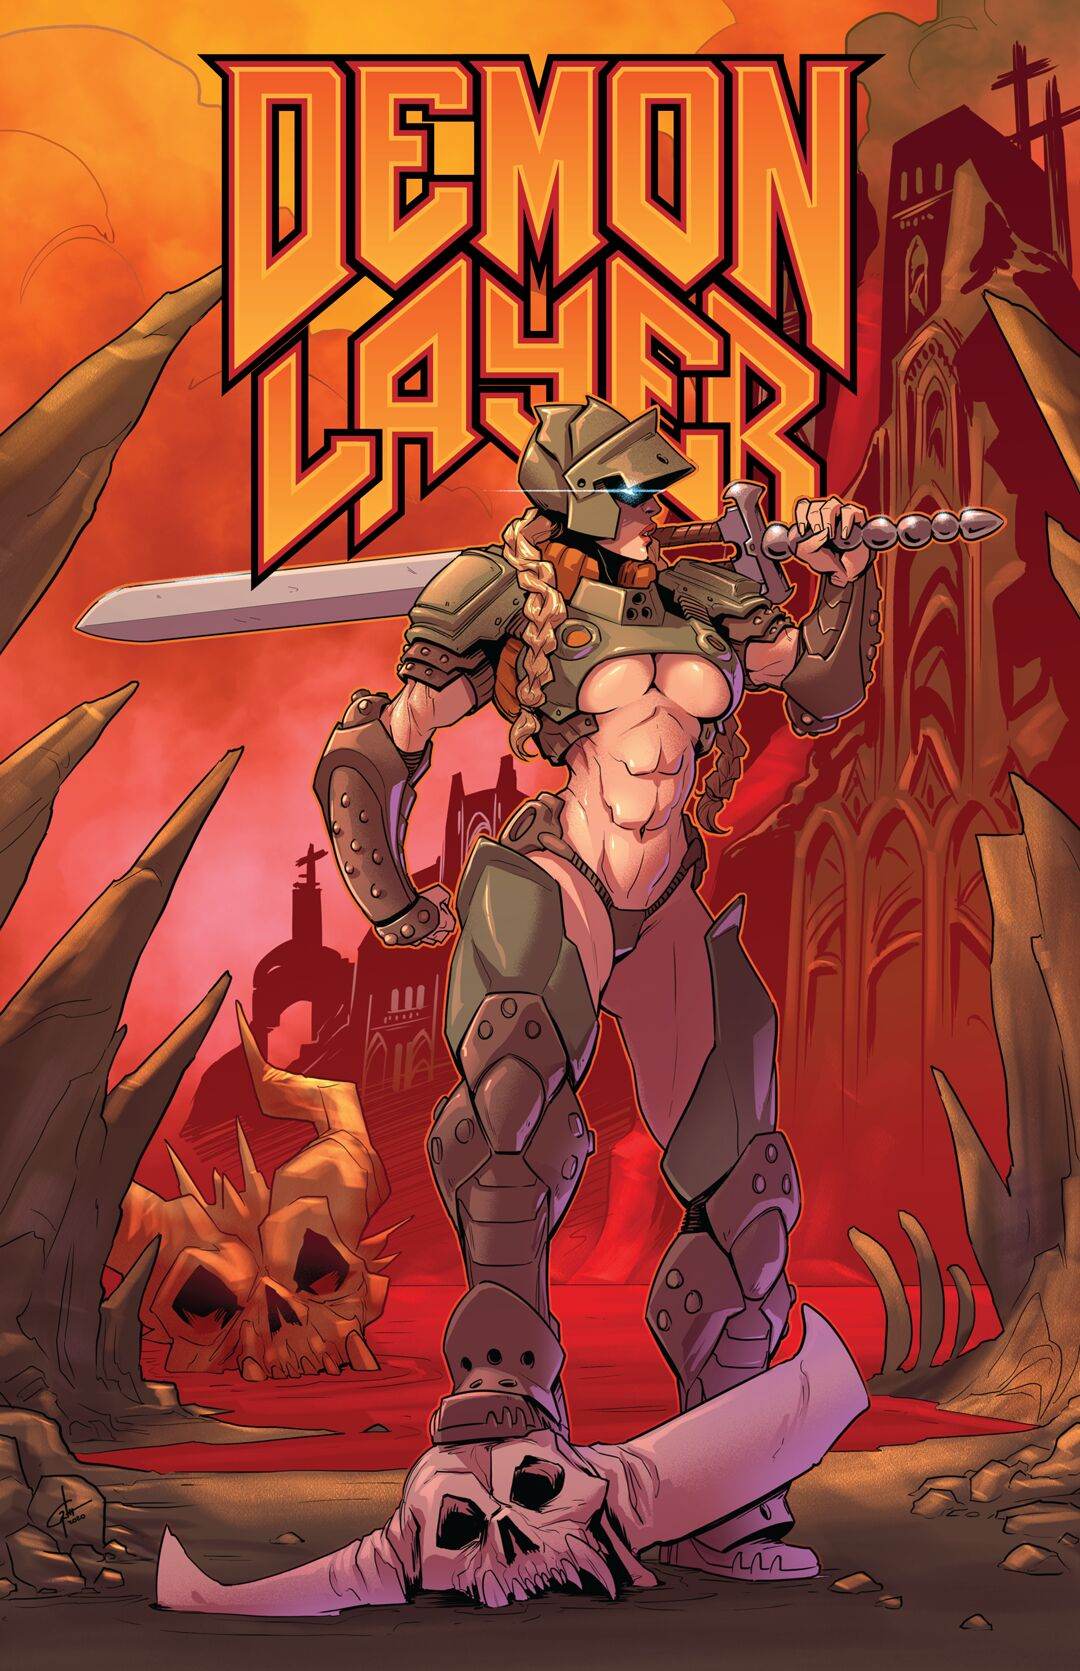 Demon Bdsm Cartoon - Demon Layer â€“ Garth Graham - Comics Army